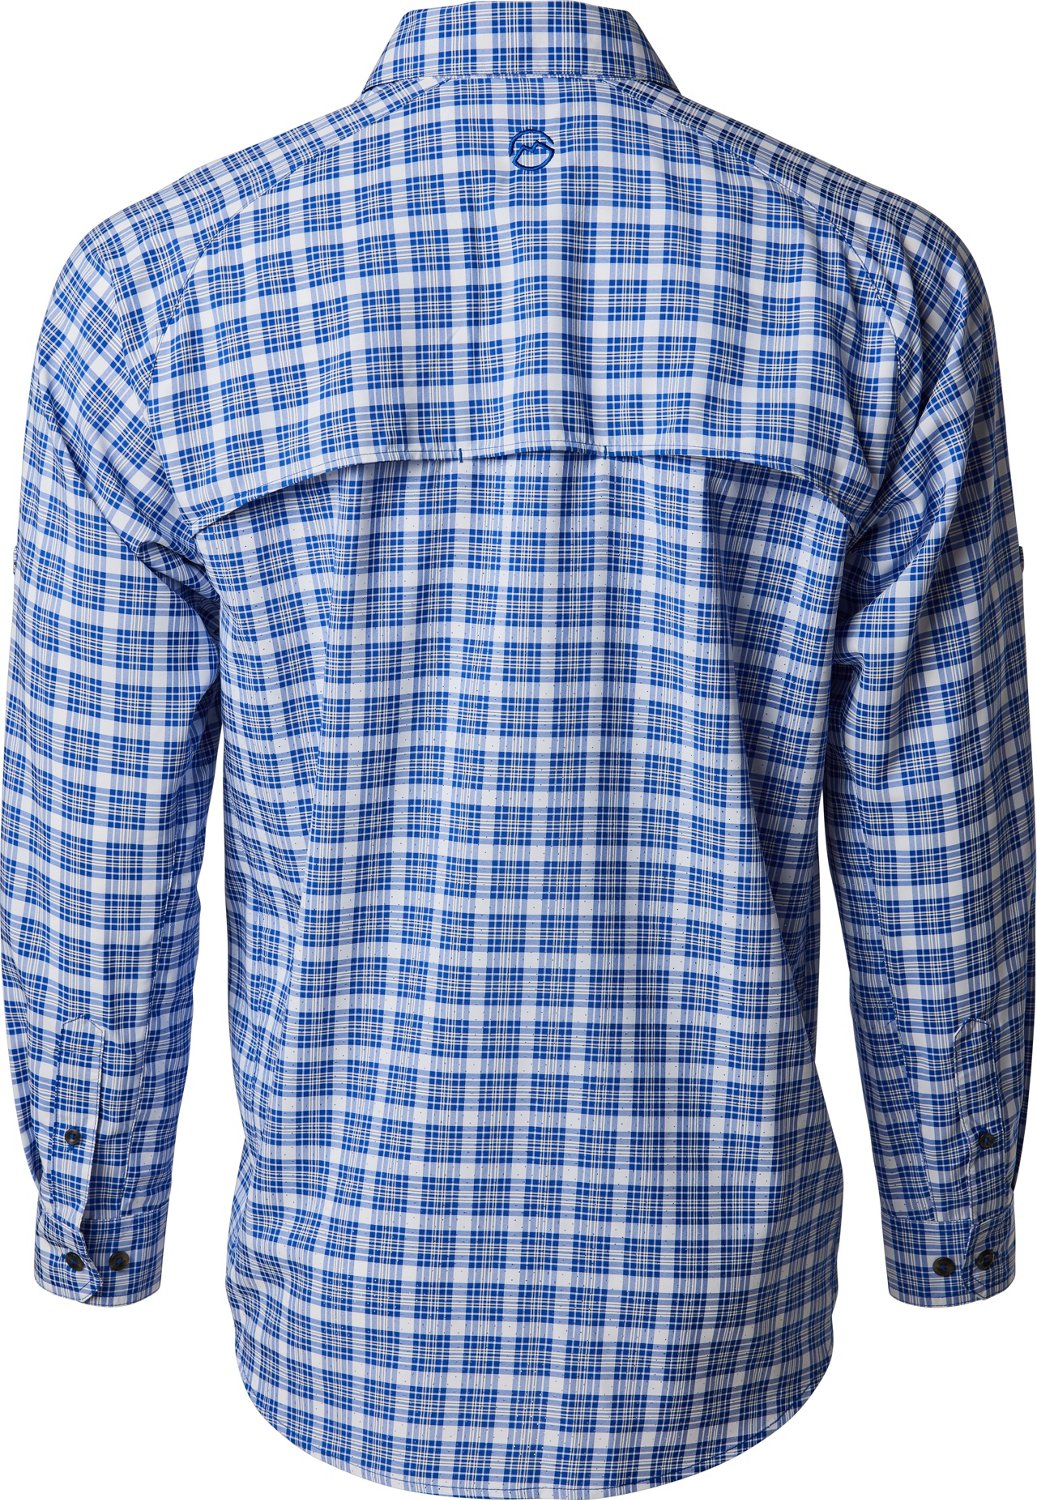 Magellan Outdoors Men's Pro Fish Plaid Long Sleeve Shirt